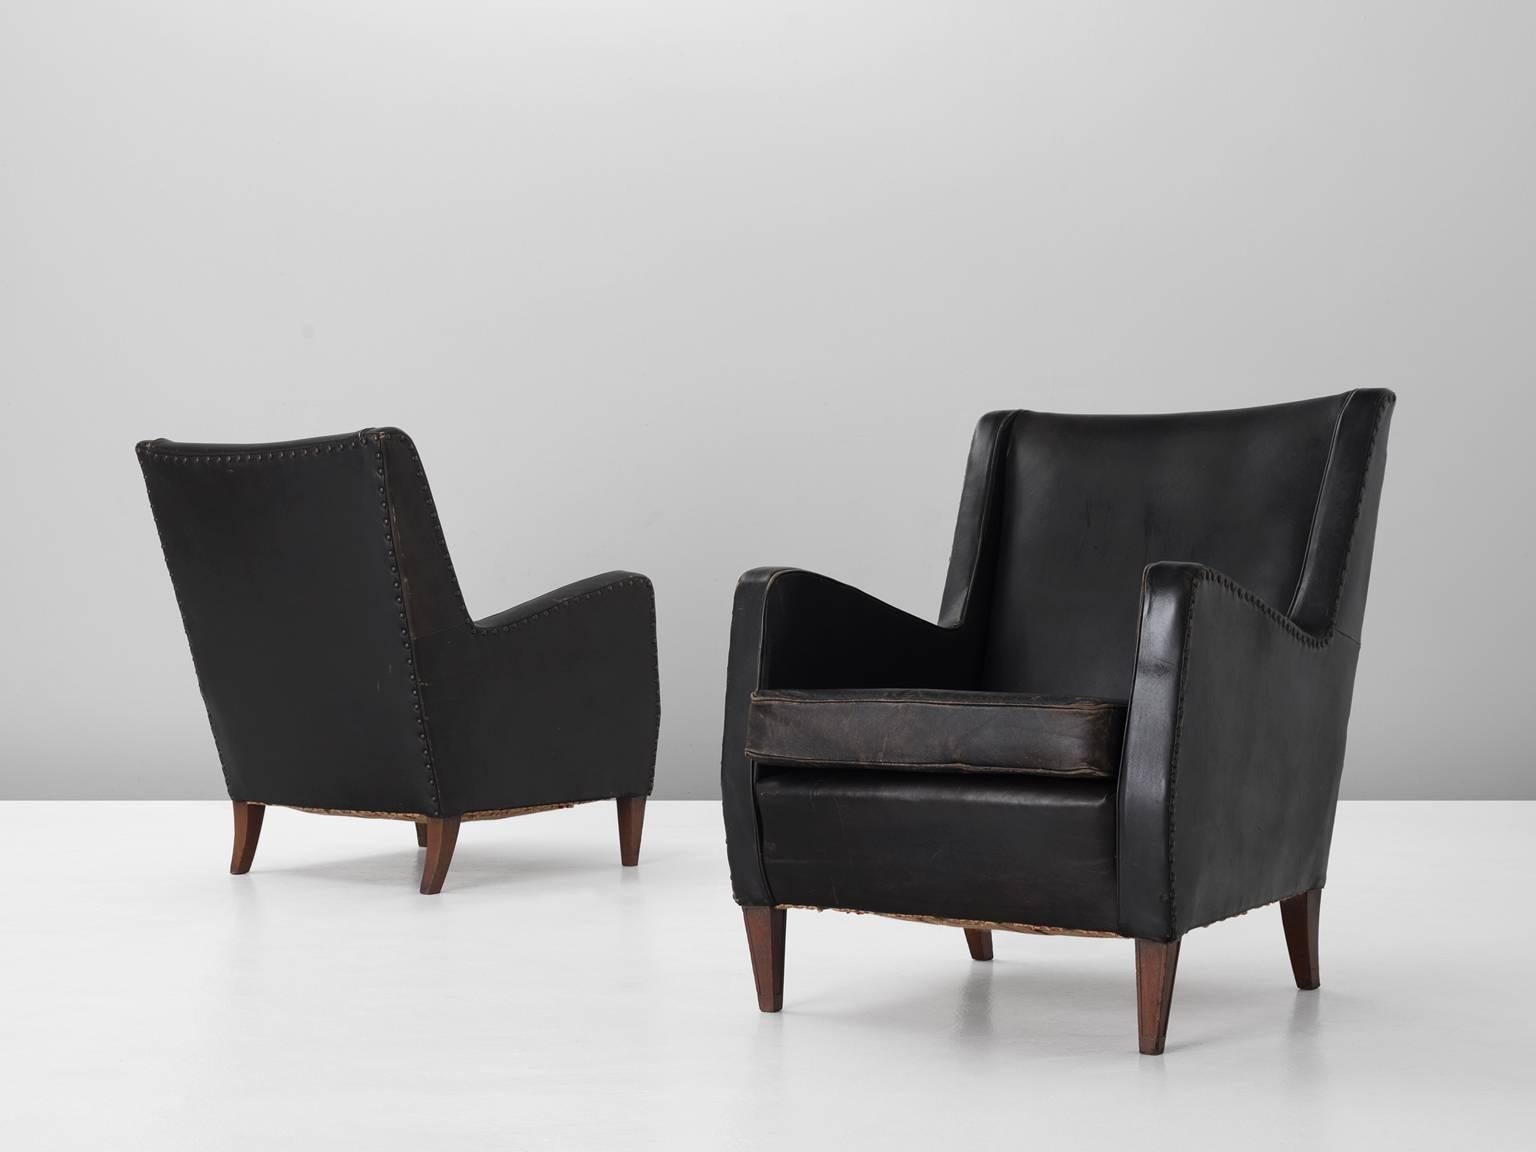 Mid-20th Century Danish Living-Room Set in Original Black Leather Upholstery